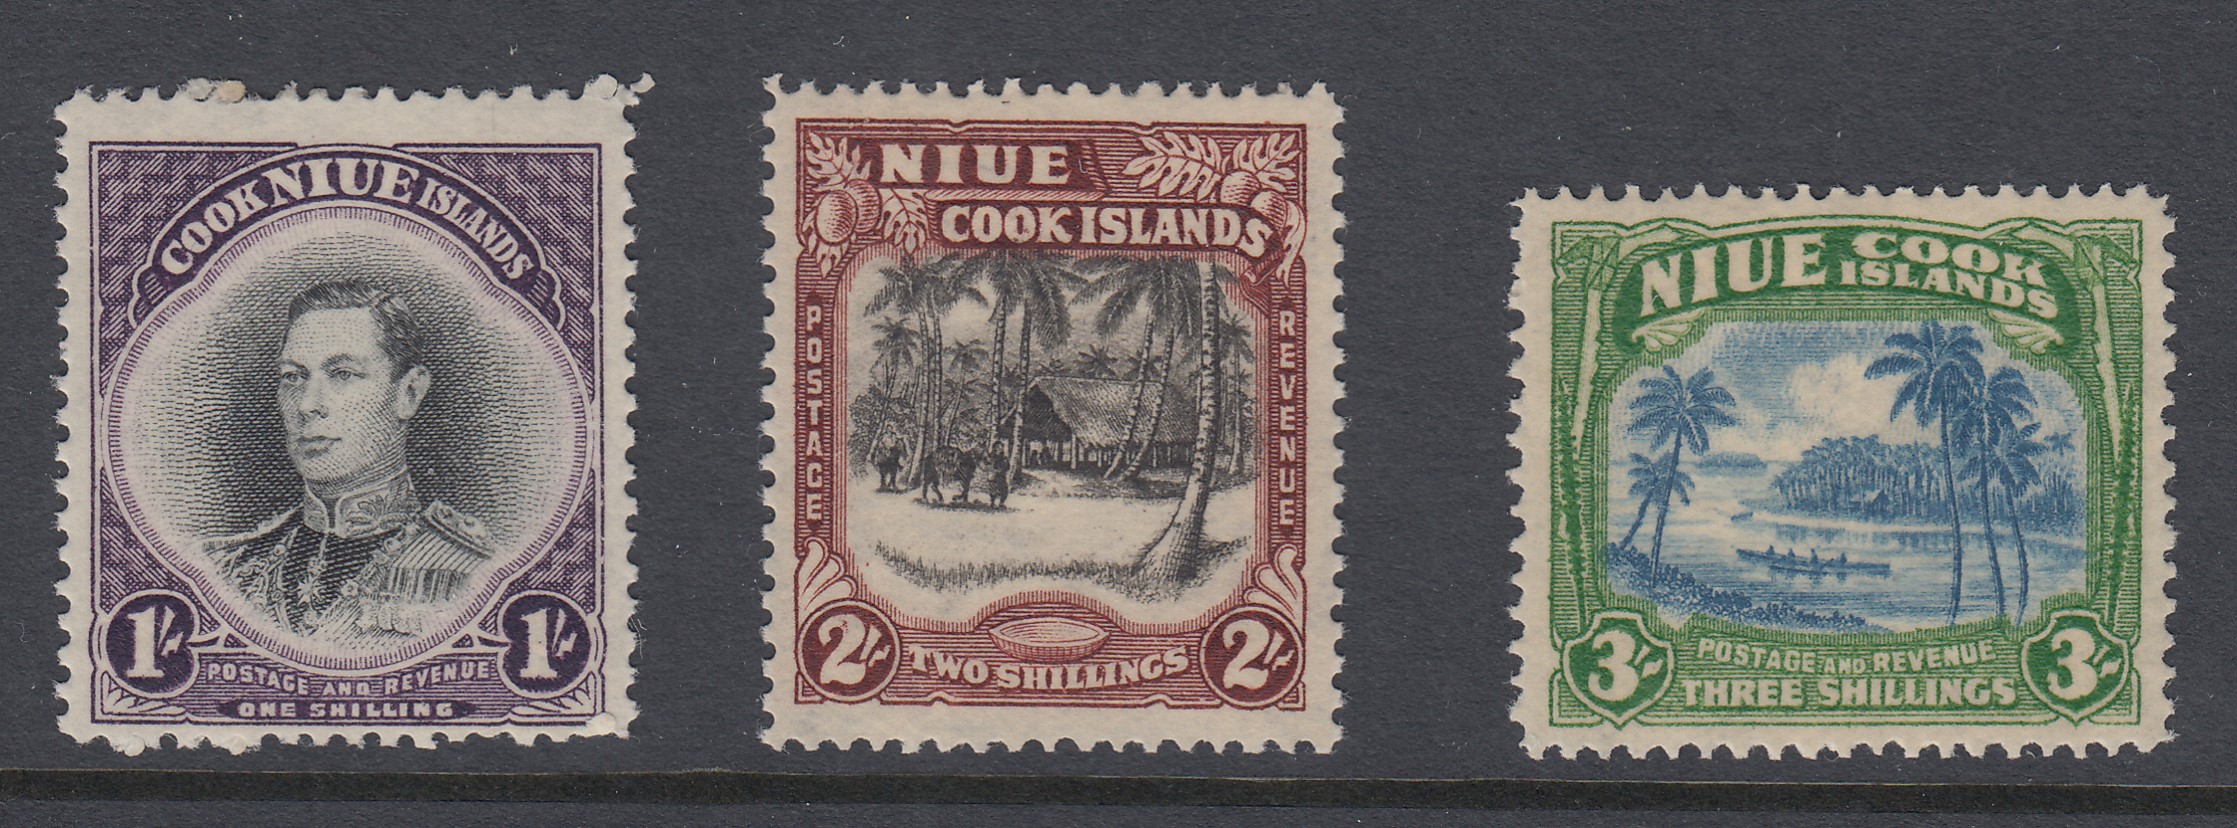 STAMPS NIUE ISLANDS, 1938 set of three M